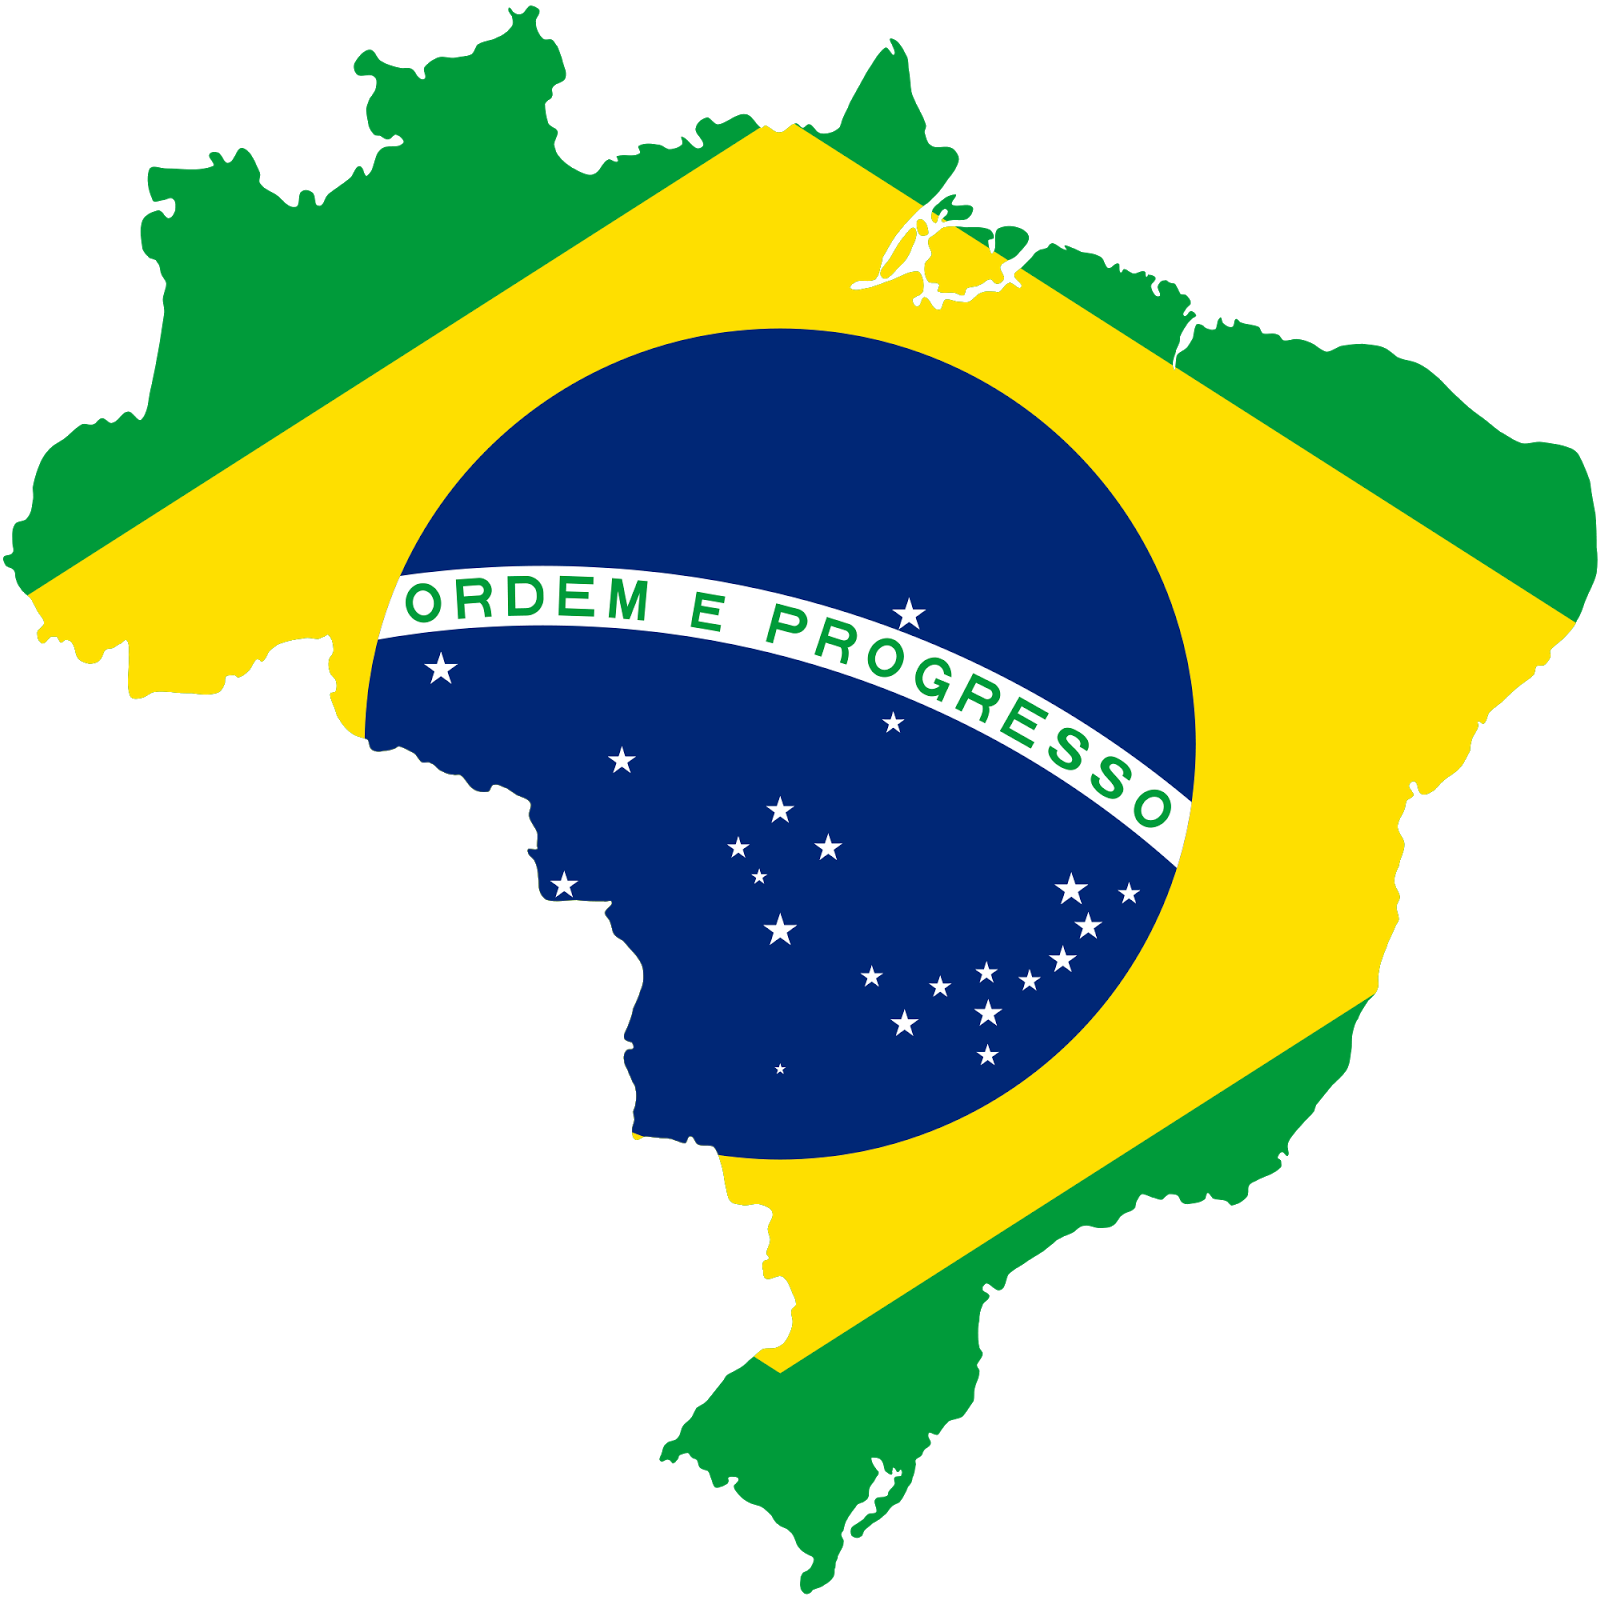 Brasil Brasileiro - Amor e Paz, Democracia e Soberania